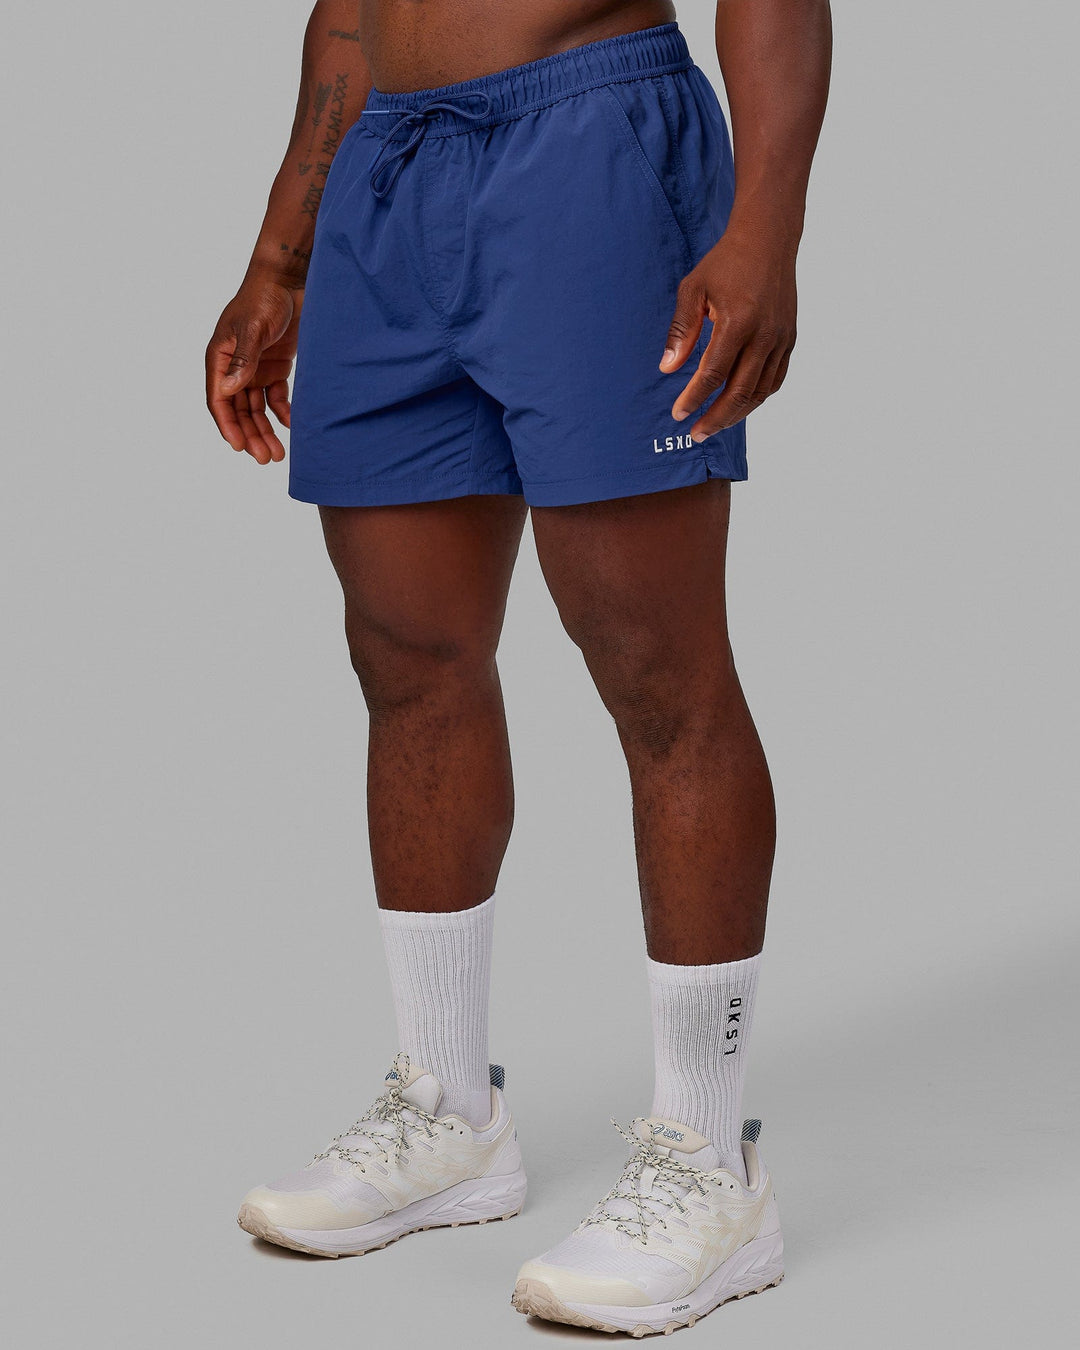 Man wearing Classic 5" Shorts - Galactic Cobalt